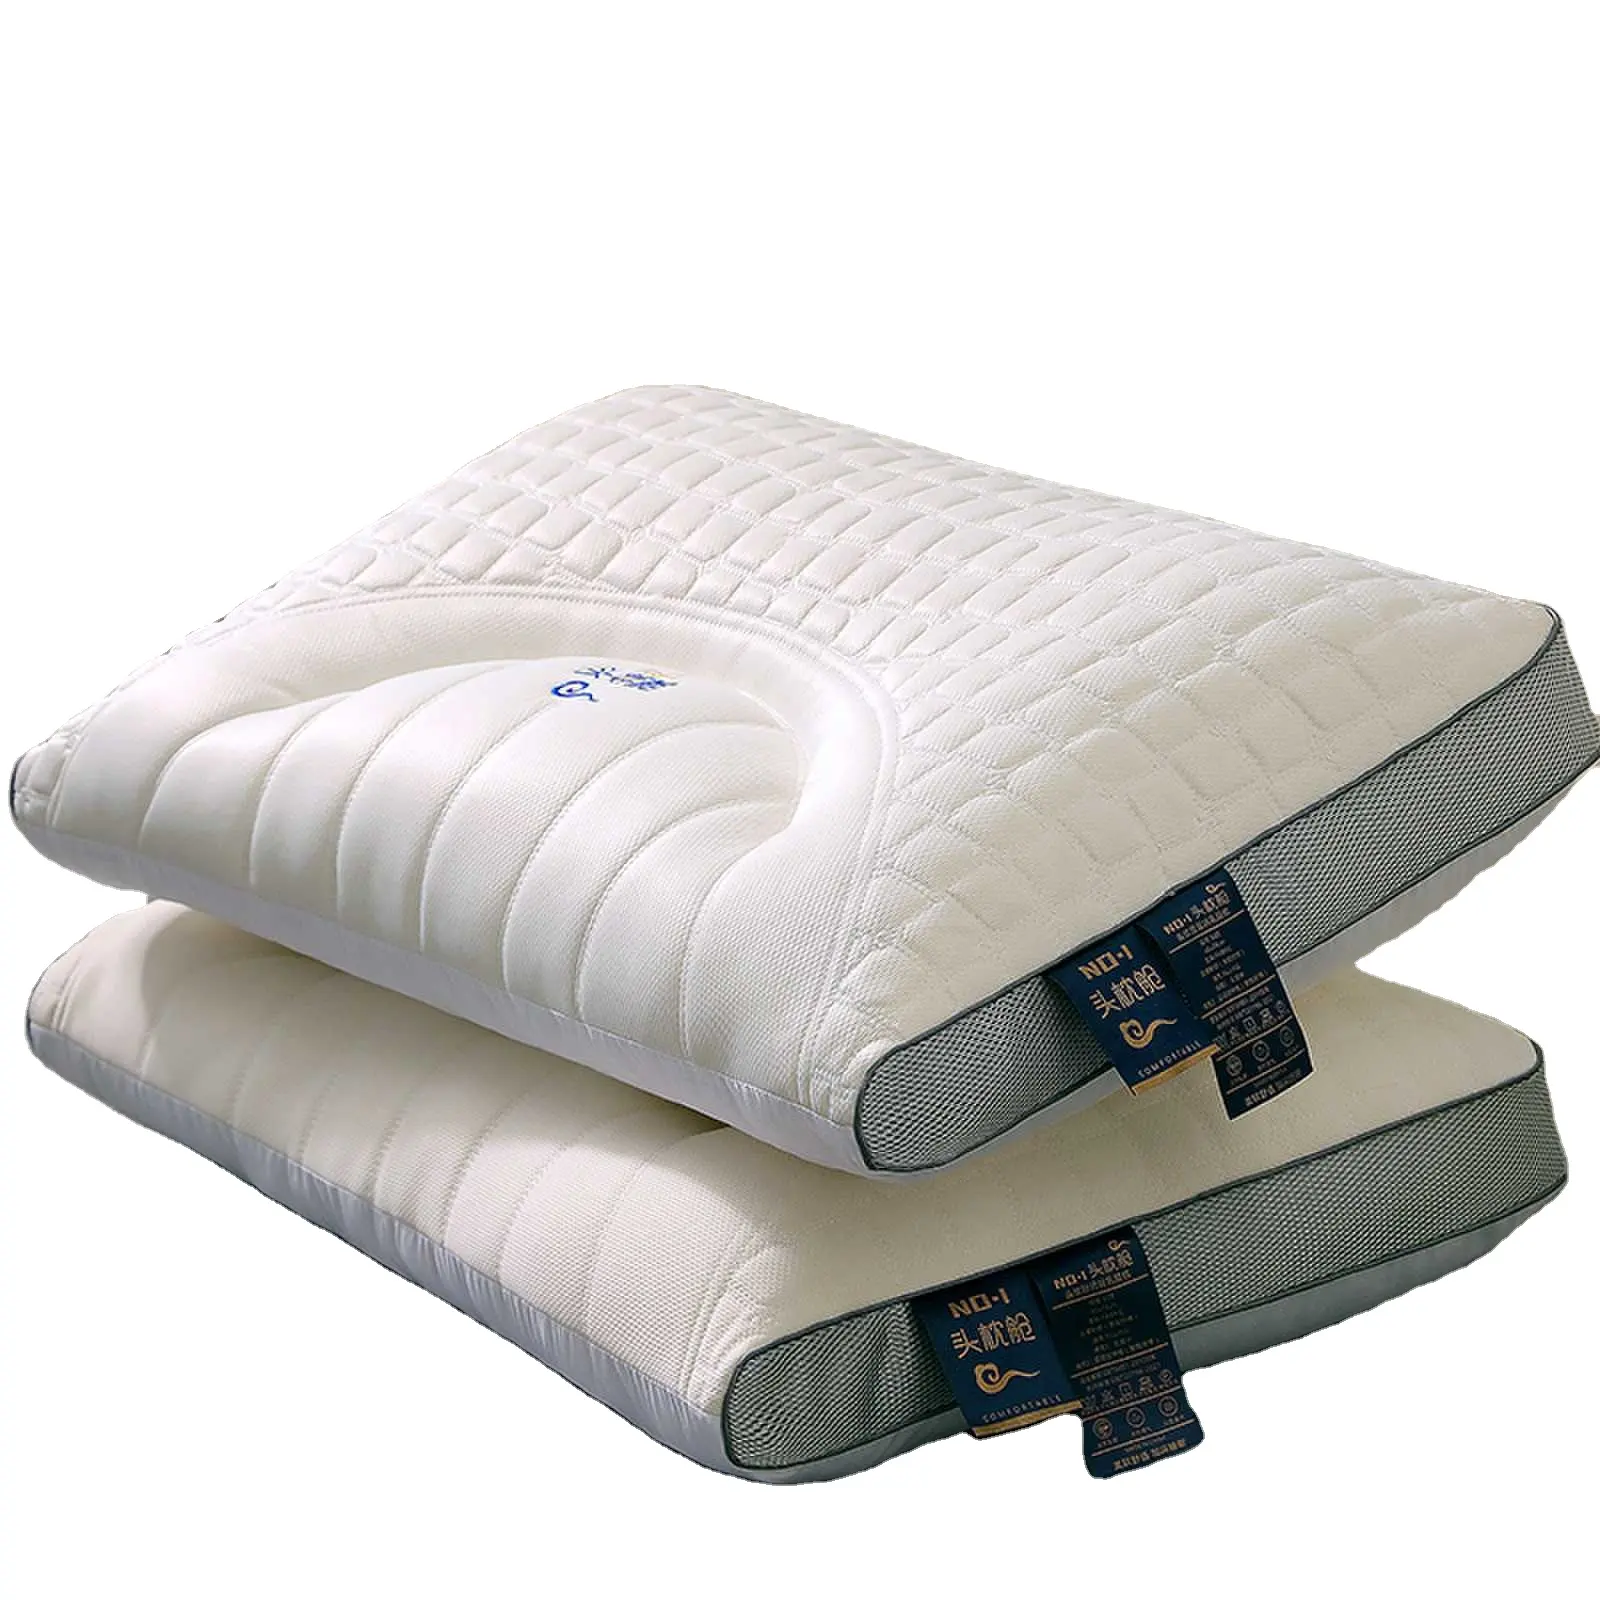 Newly designed Space pillow Anti-pilling Comfortable 3D Ergonomic Neck pillows